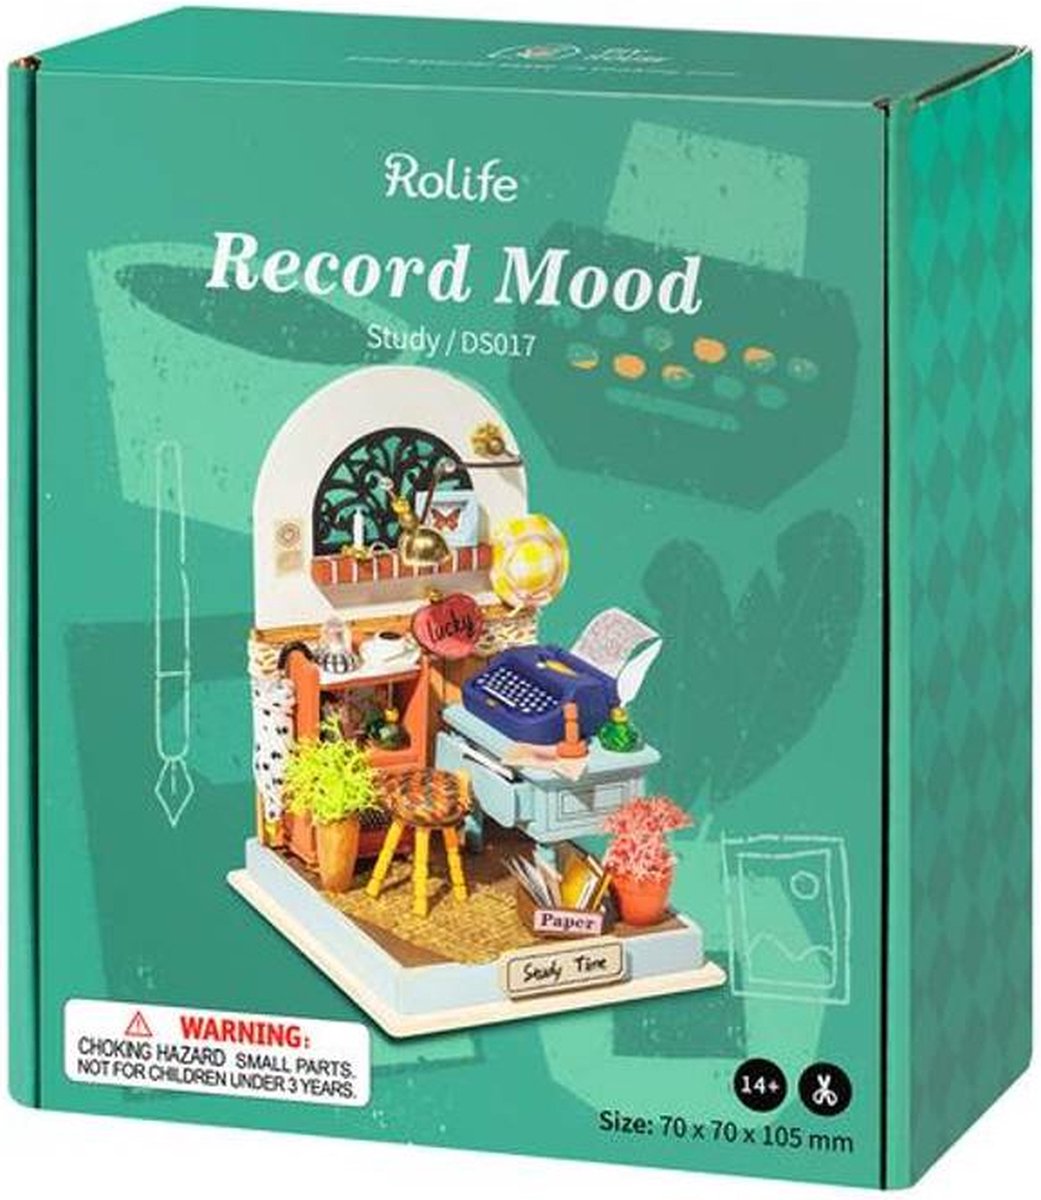 Rolife Record Mood studeerkamertje DS017